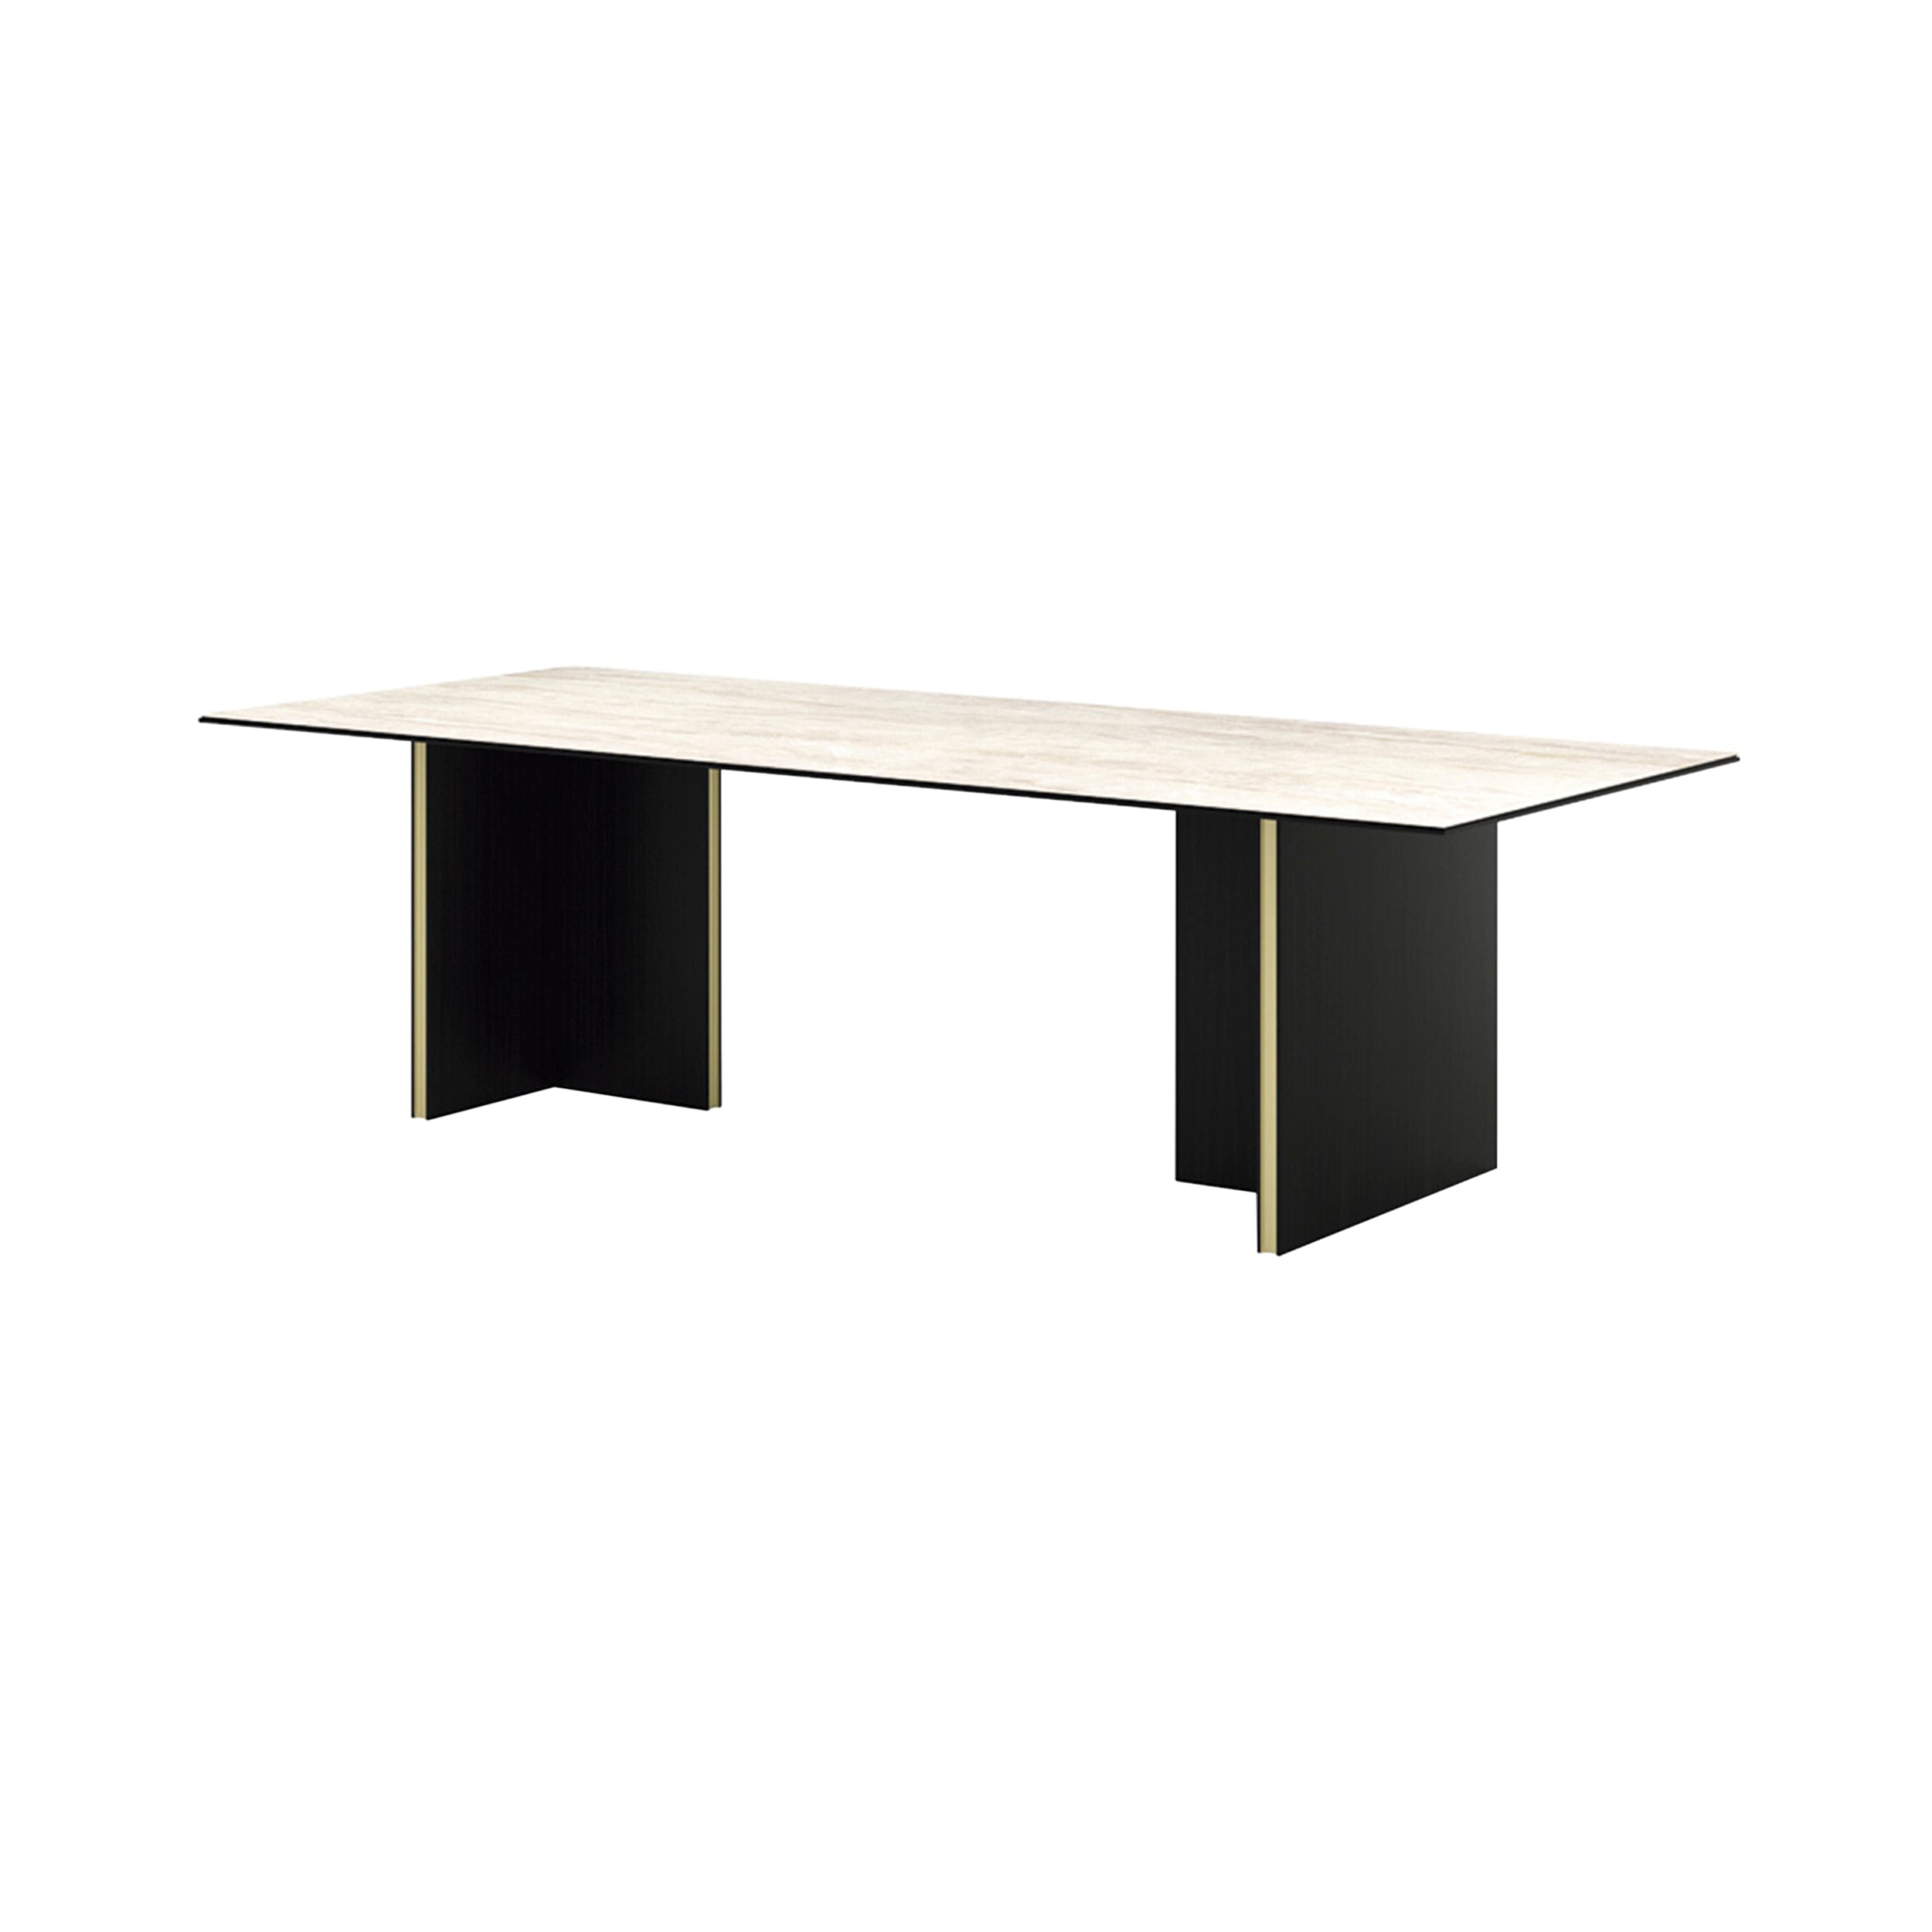 Stockholm Ceramic Table: Medium + Dekton Arga + Ebony Stained Oak + Gold